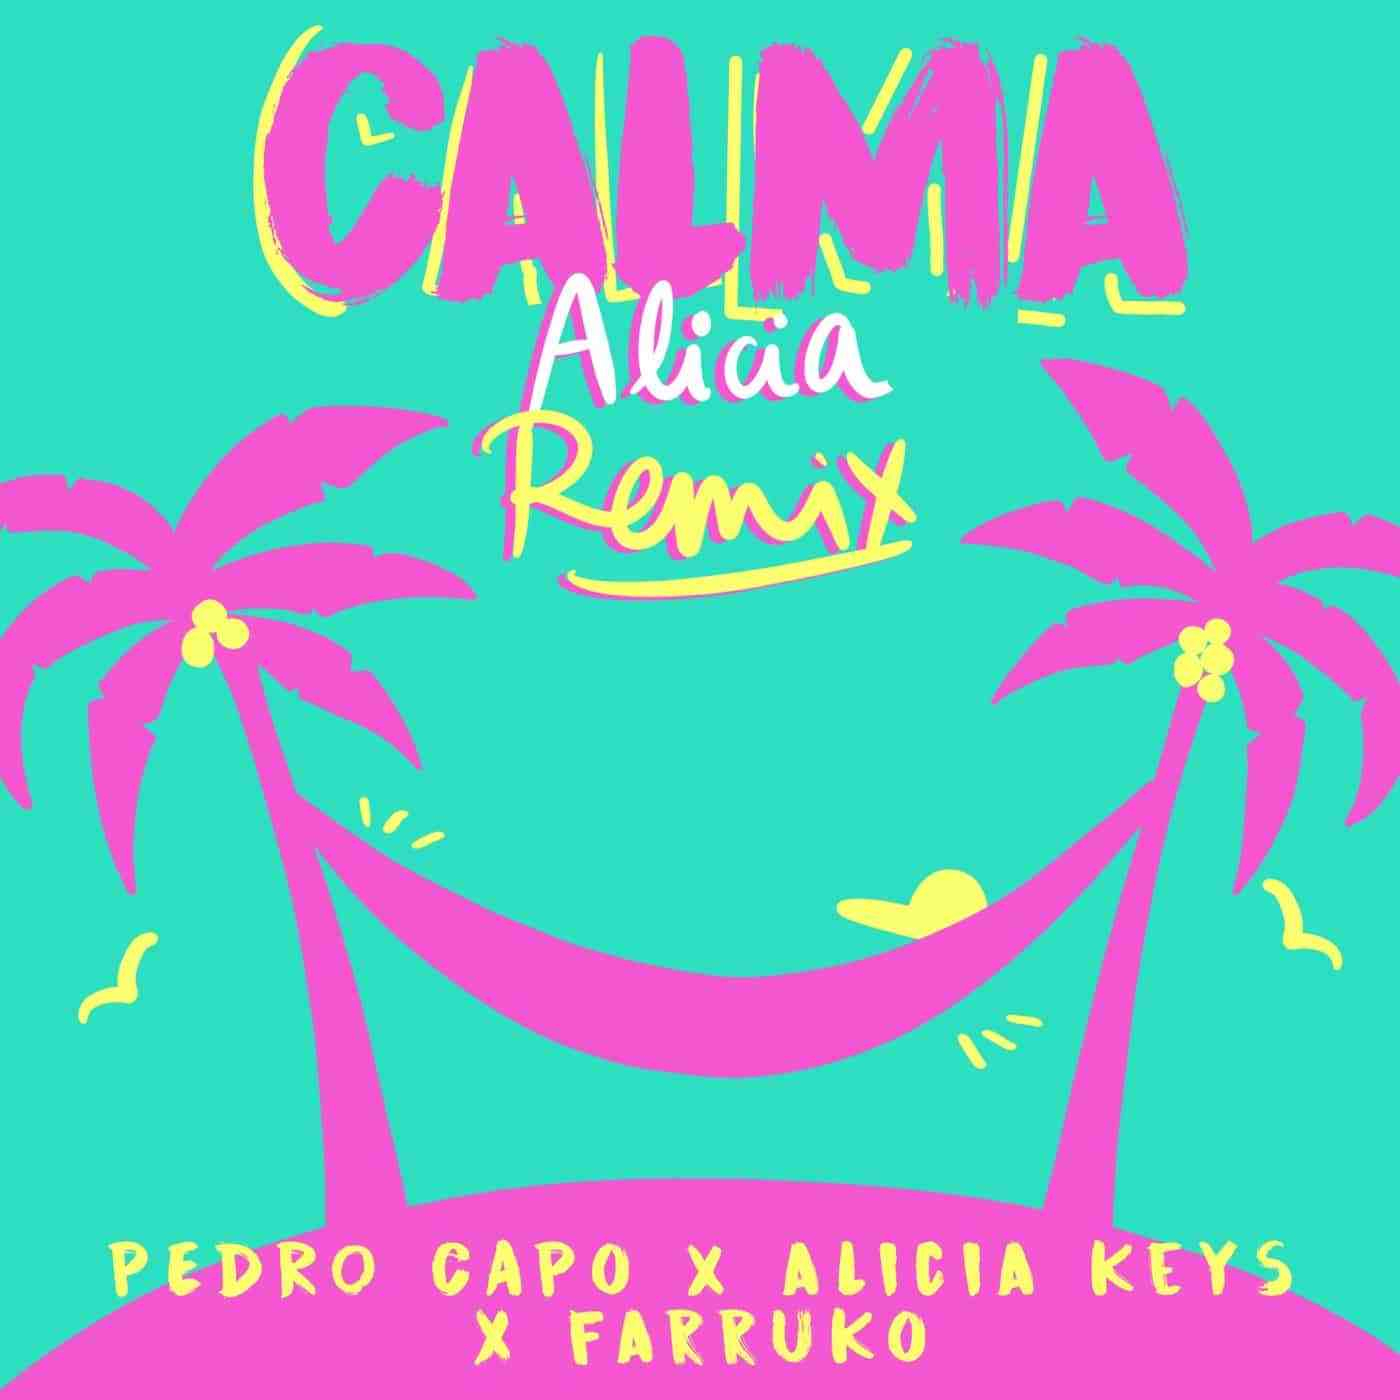 pedro-capo-alicia-keys-farruko-calma-remix (1)